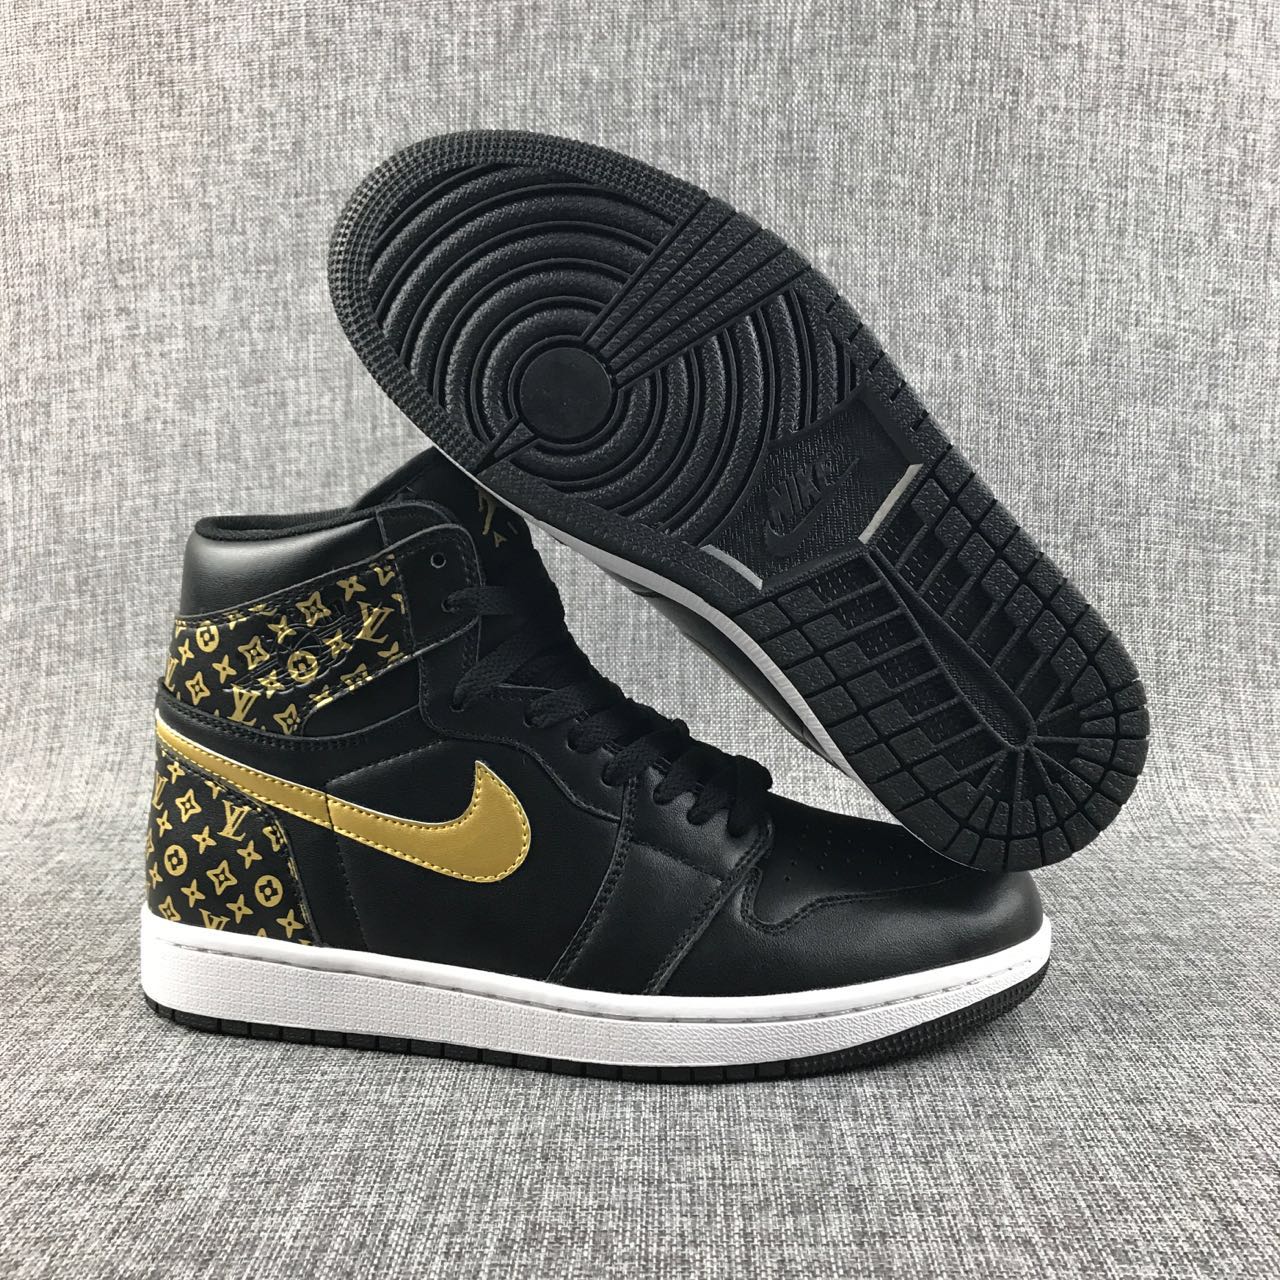 New Air Jordan 1 Print Black Gold Shoes - Click Image to Close